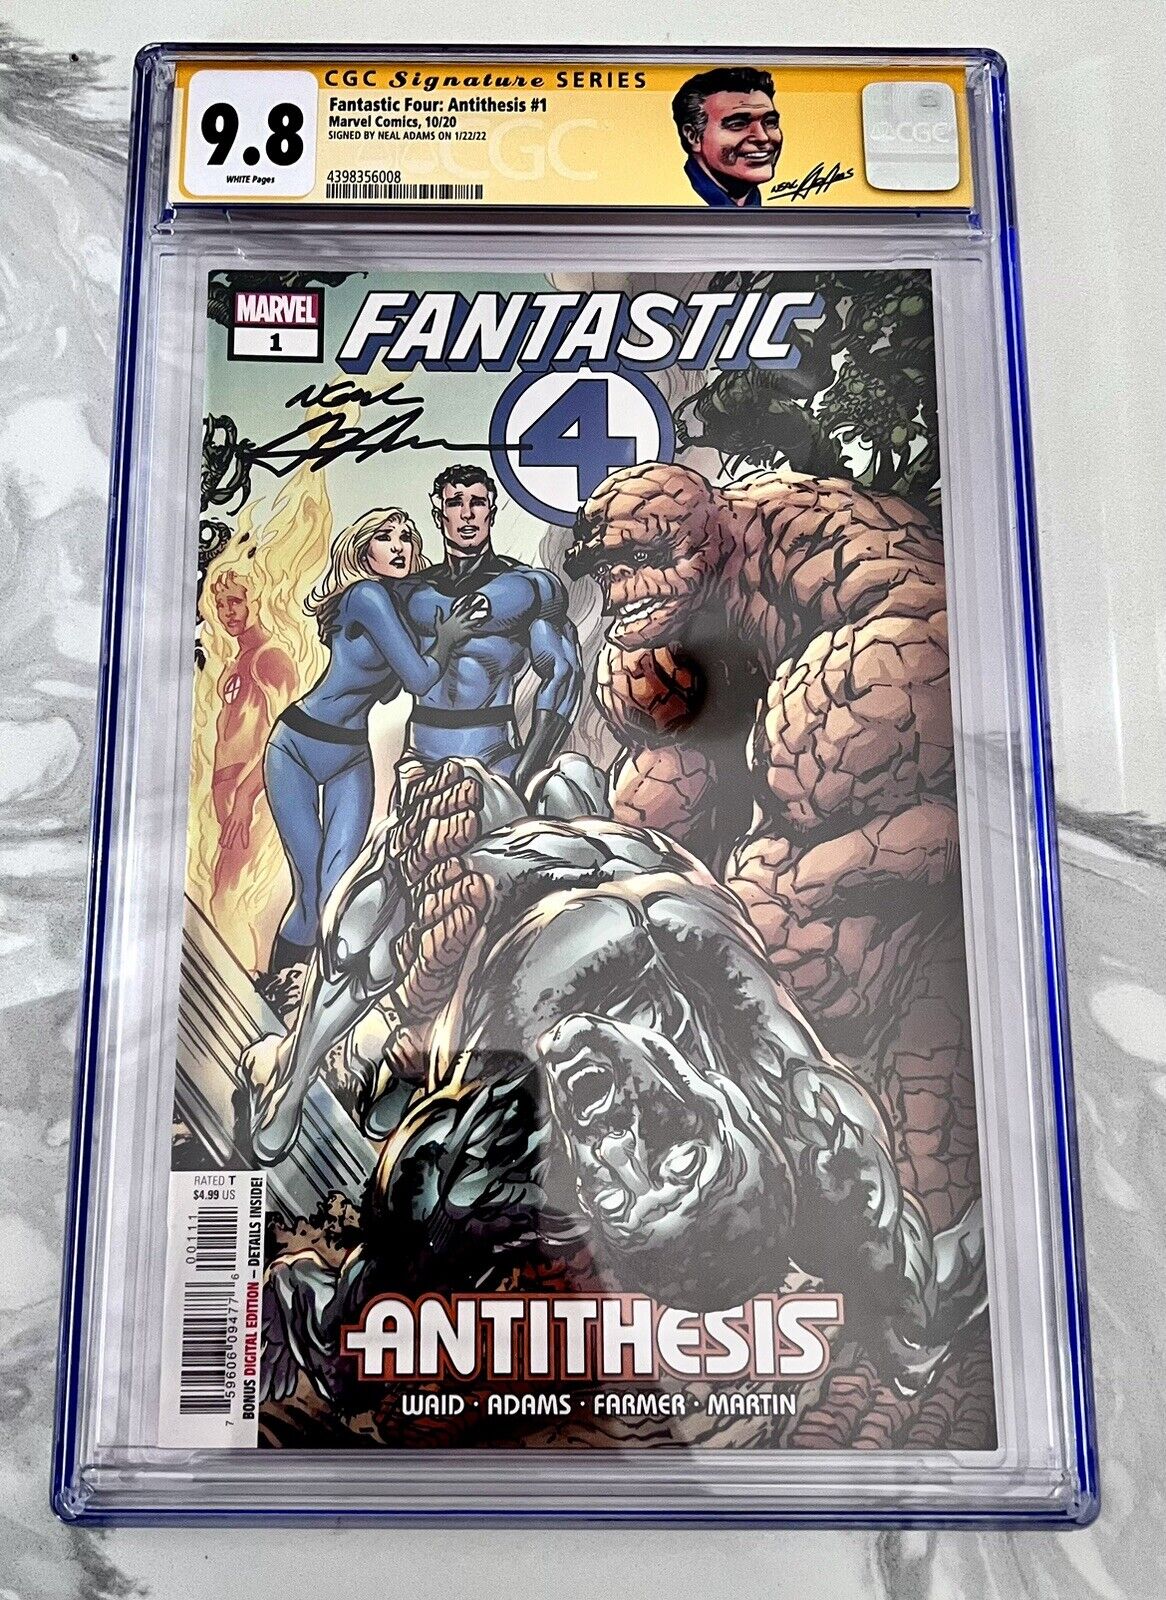 Signed Neal Adams CGC Rare 9.8 Fantastic Four: Antithesis #1 Adams Custom Label